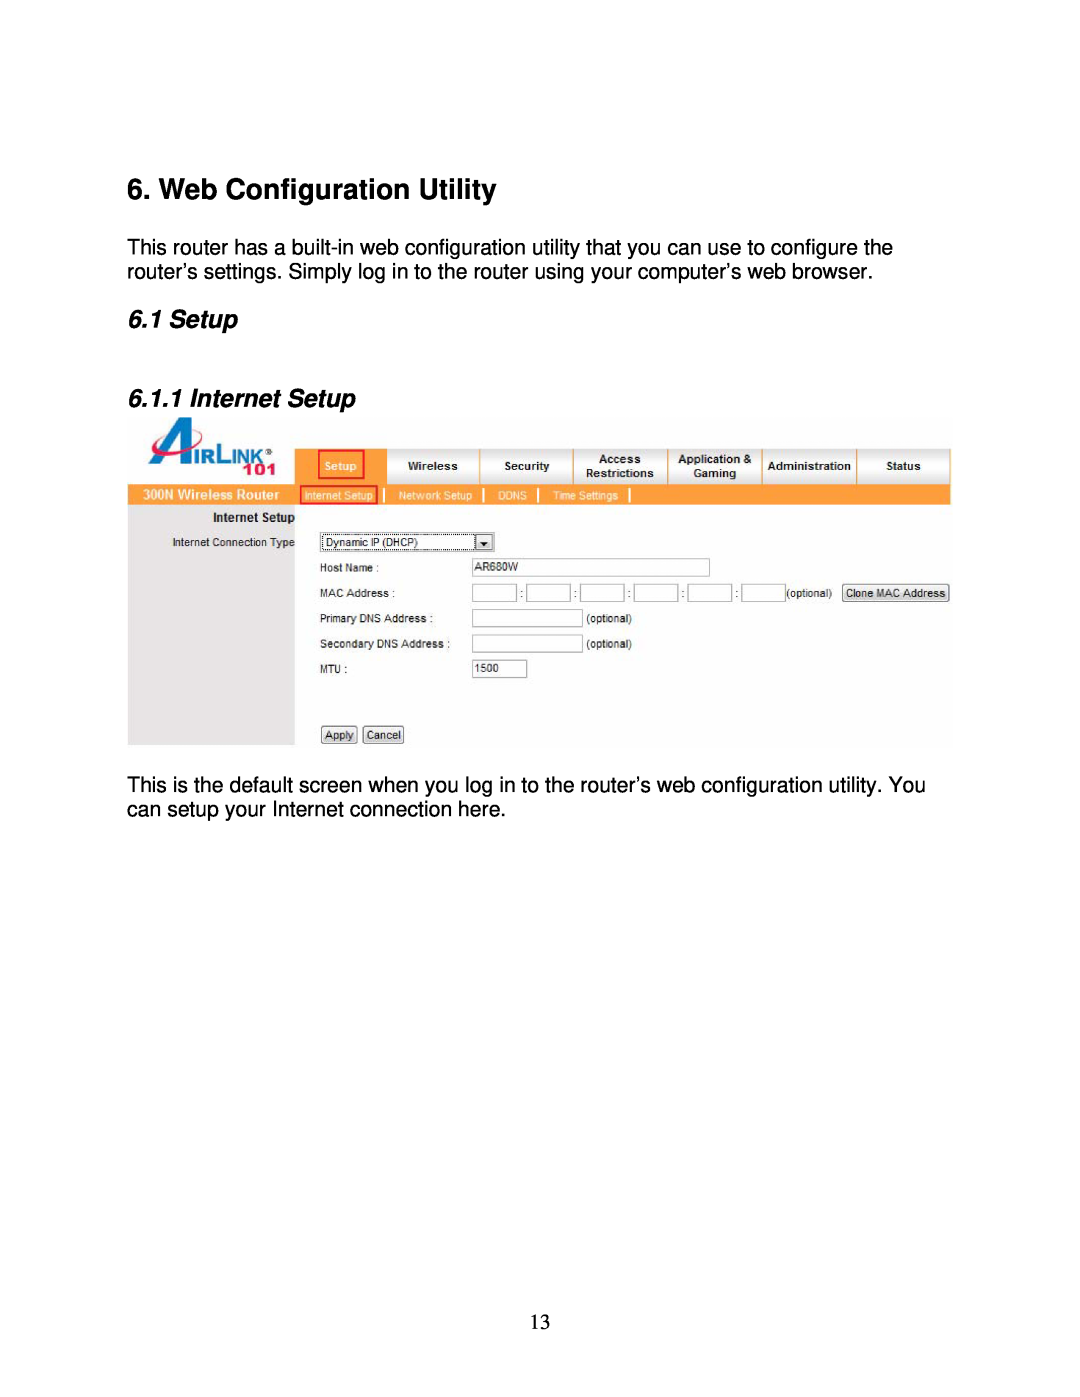 Airlink101 300N user manual Web Configuration Utility, Setup 6.1.1 Internet Setup 